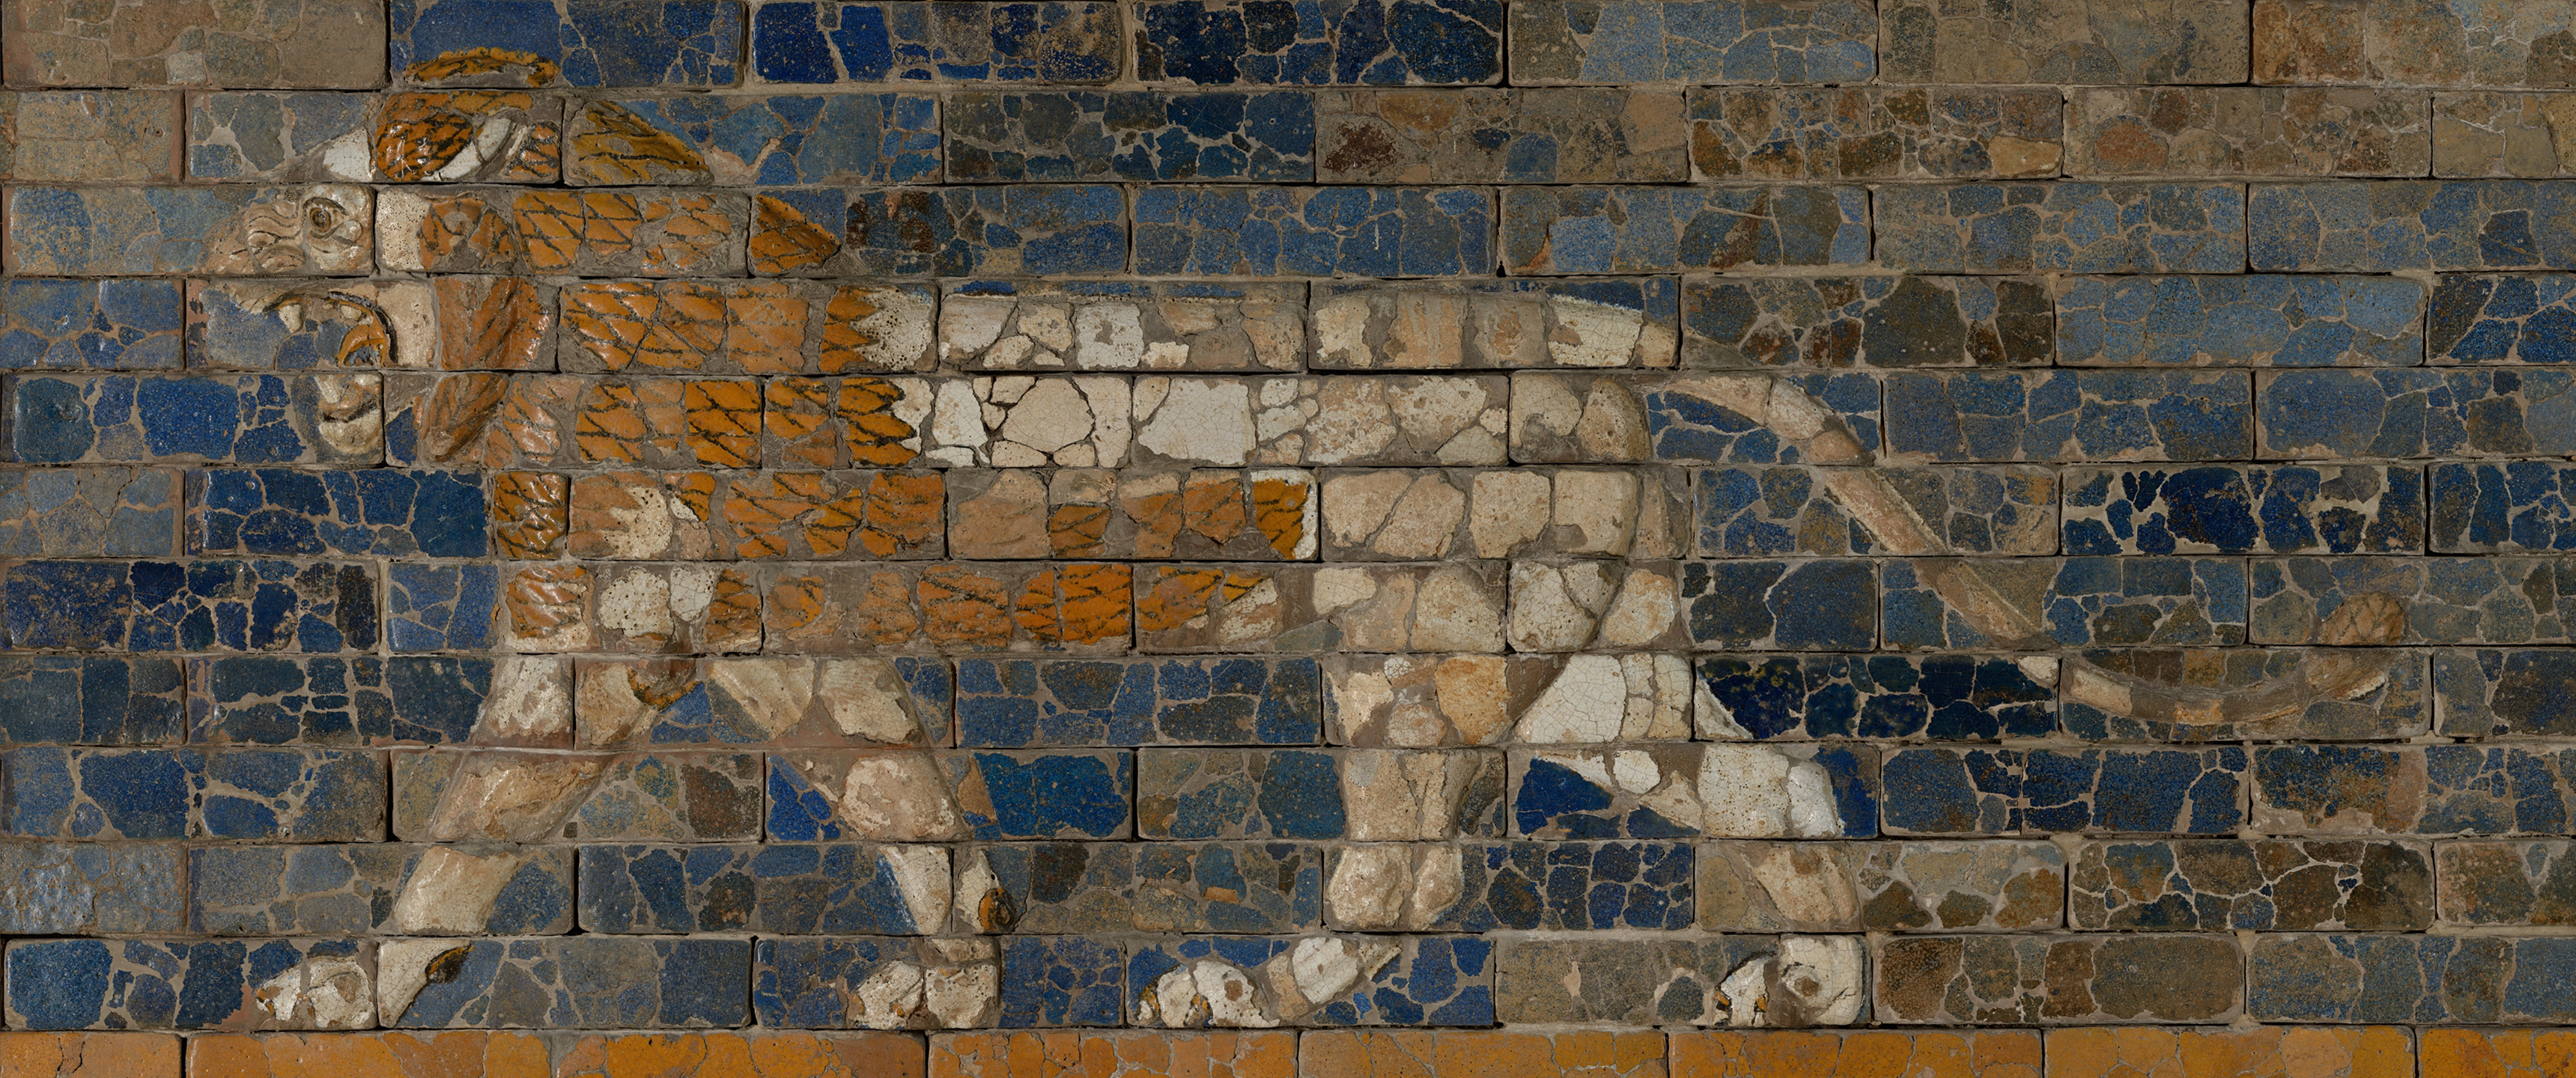 Mural Mosaic Lion Ultrawide Babylonian Bricks 3440x1440